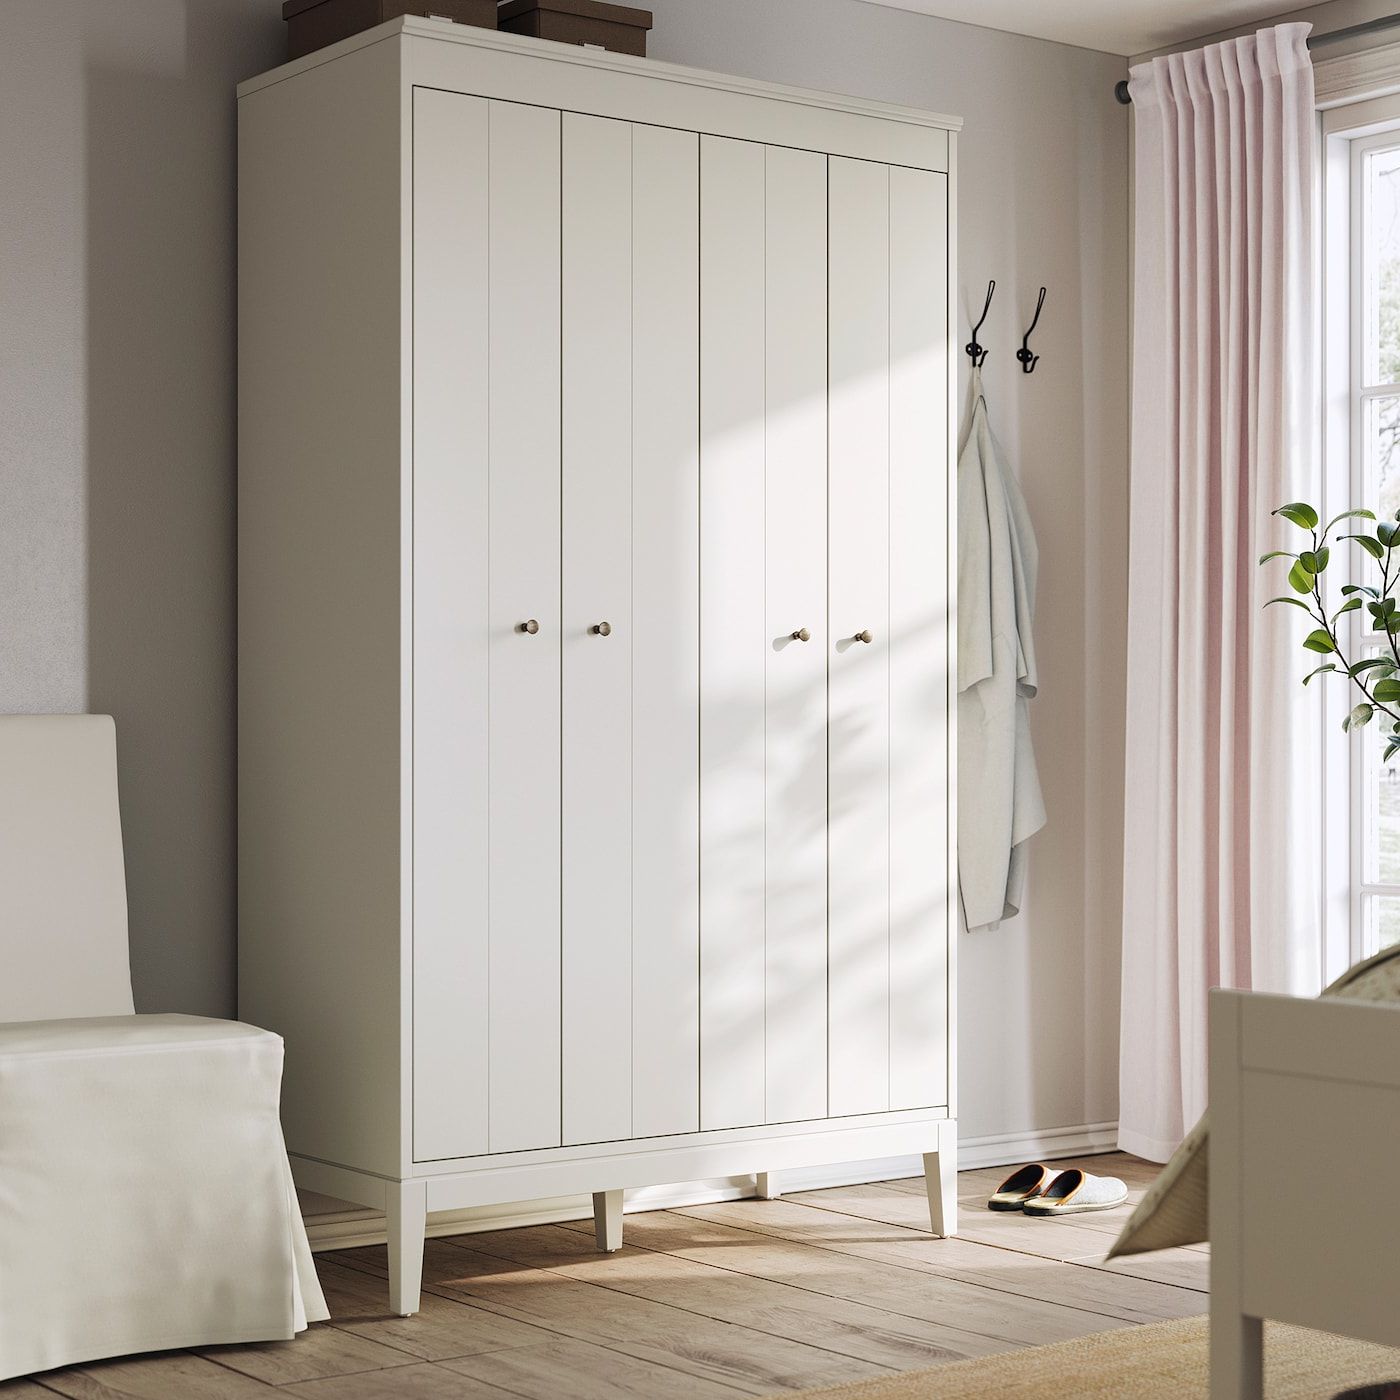 Idanäs Wardrobe, White, 121x211 Cm – Ikea With White Wood Wardrobes (View 7 of 20)